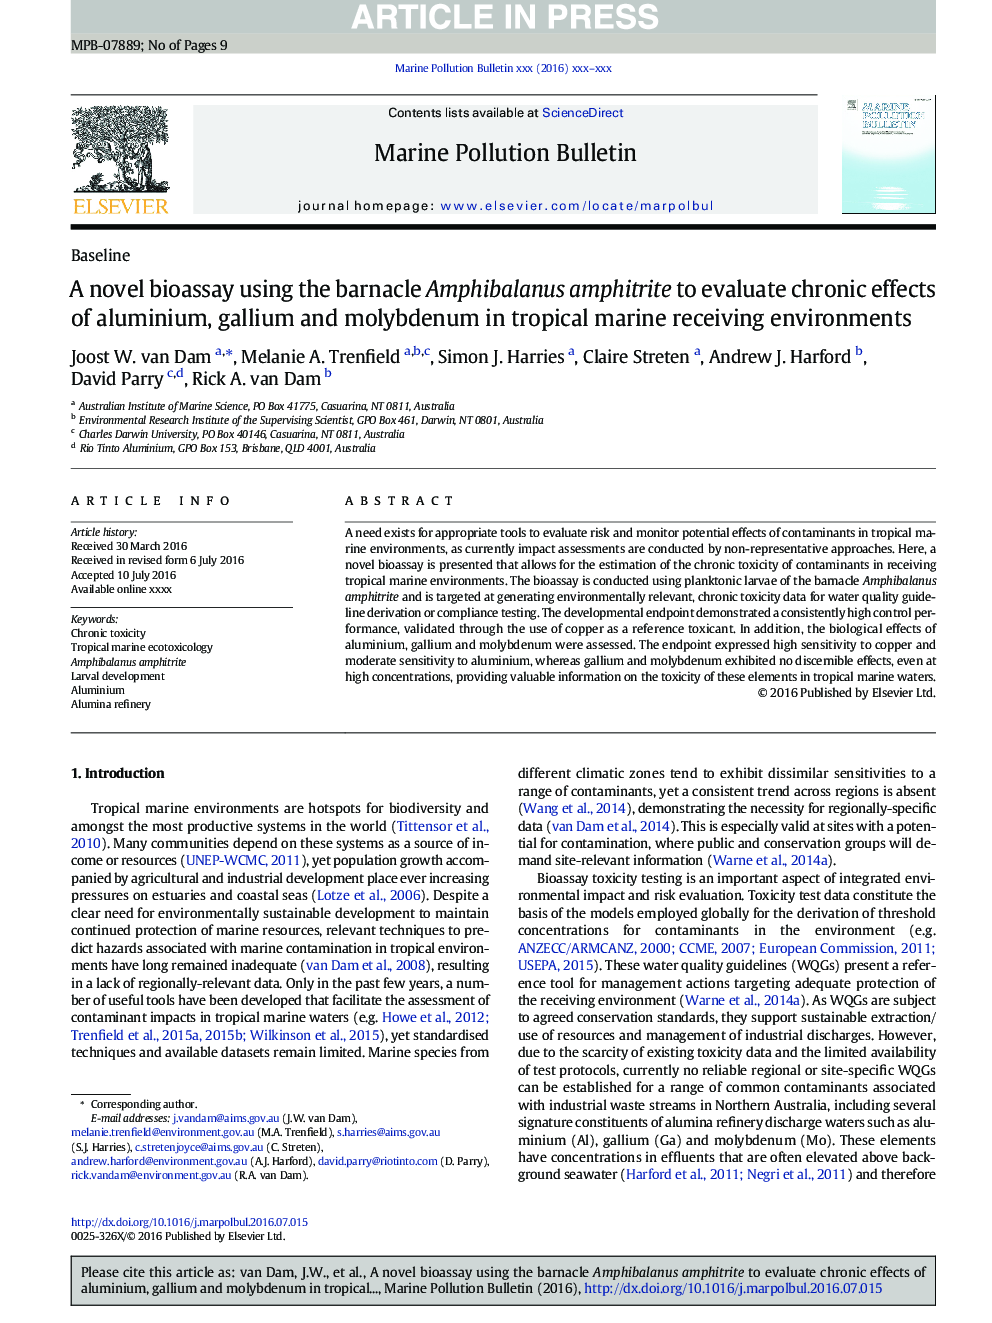 A novel bioassay using the barnacle Amphibalanus amphitrite to evaluate chronic effects of aluminium, gallium and molybdenum in tropical marine receiving environments